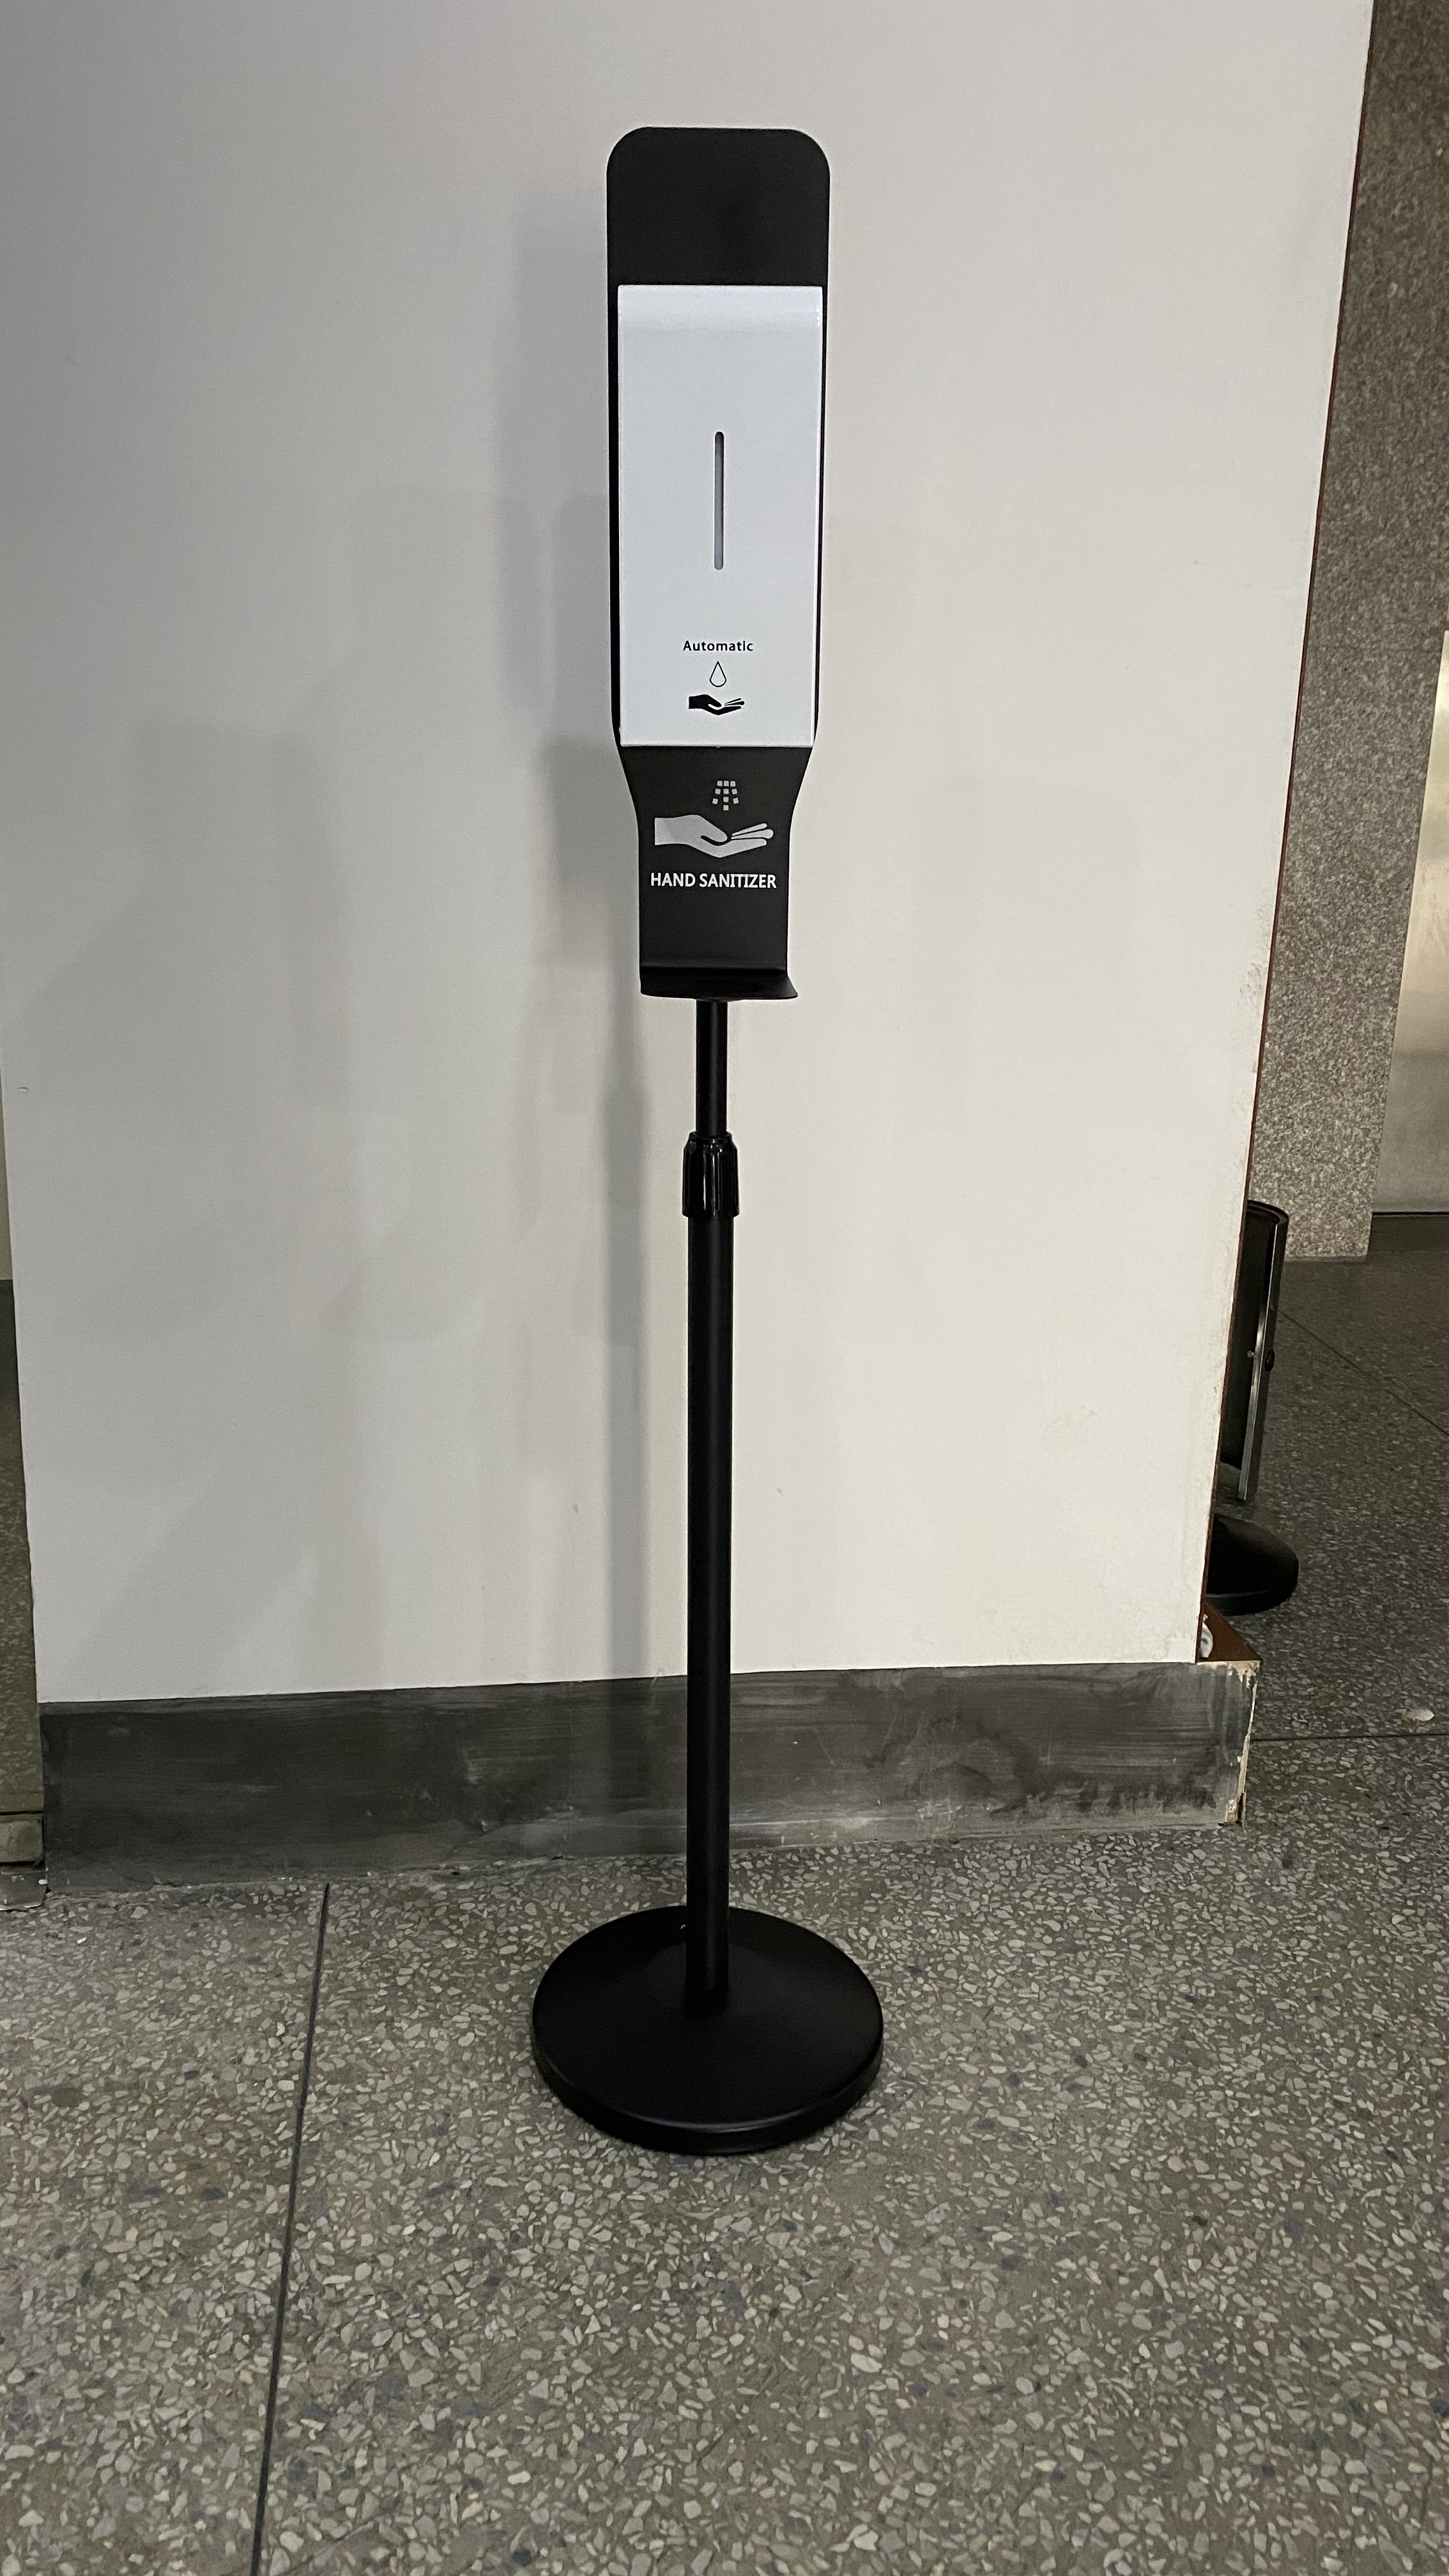 Auto Hand Sanitizing Station Indoor Floor Standing Hand Sanitizing Dispenser with 1500ML